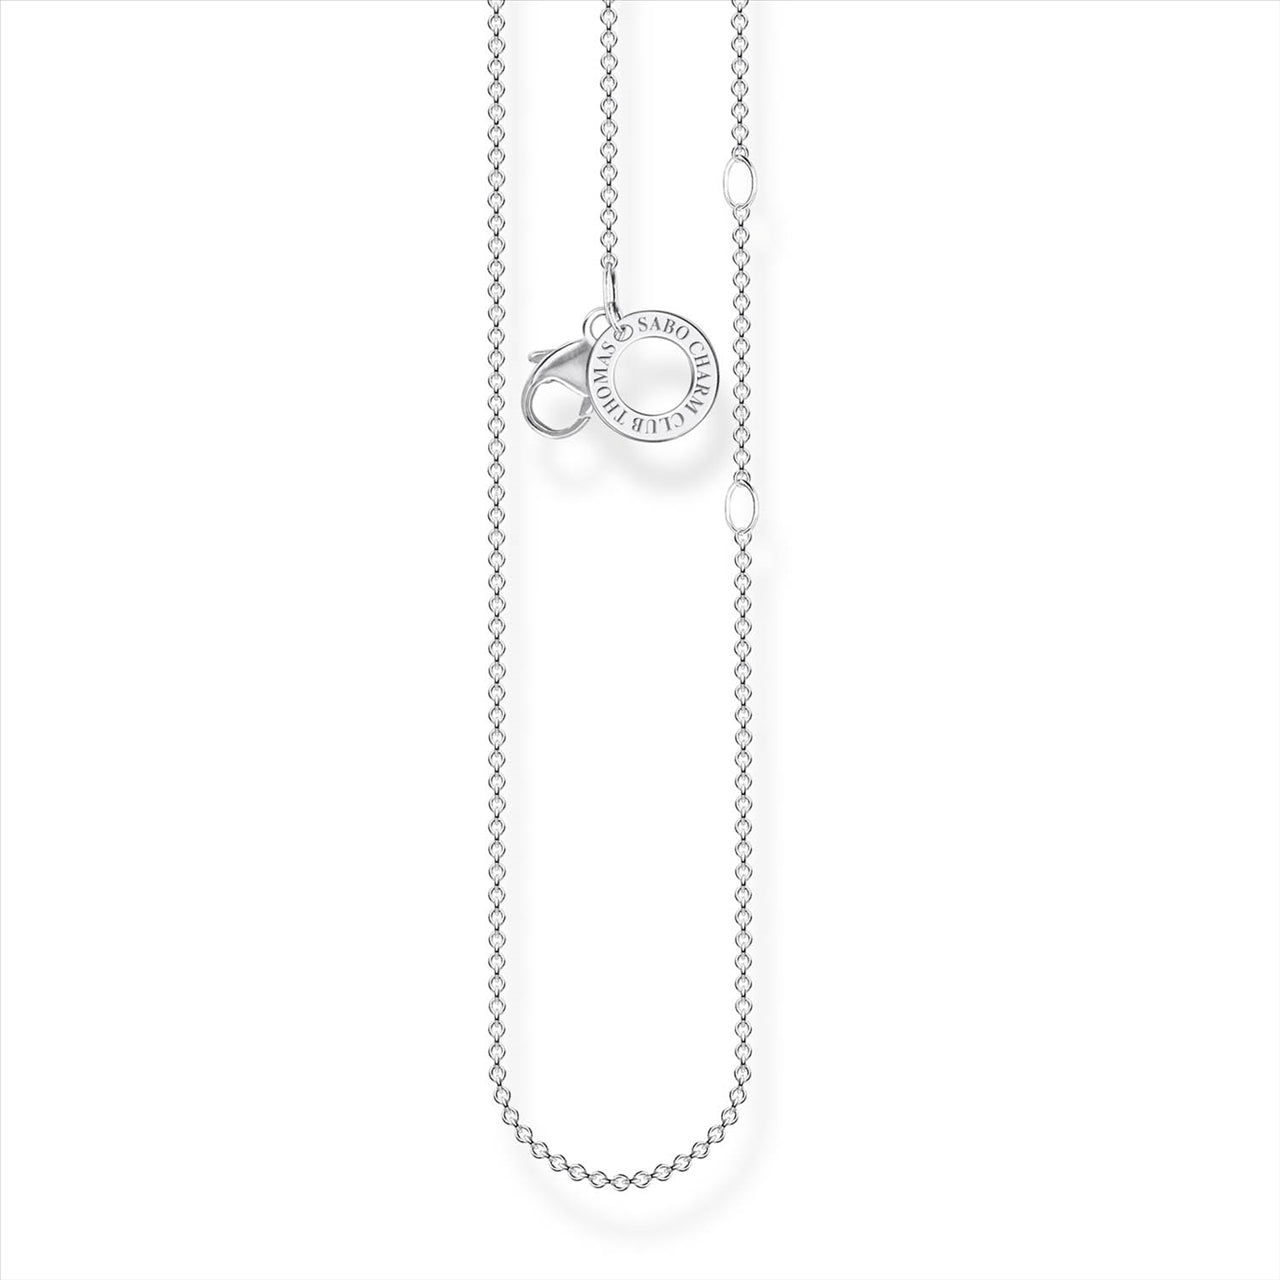 Thomas Sabo Charm Club Anchor Link Silver Necklace.